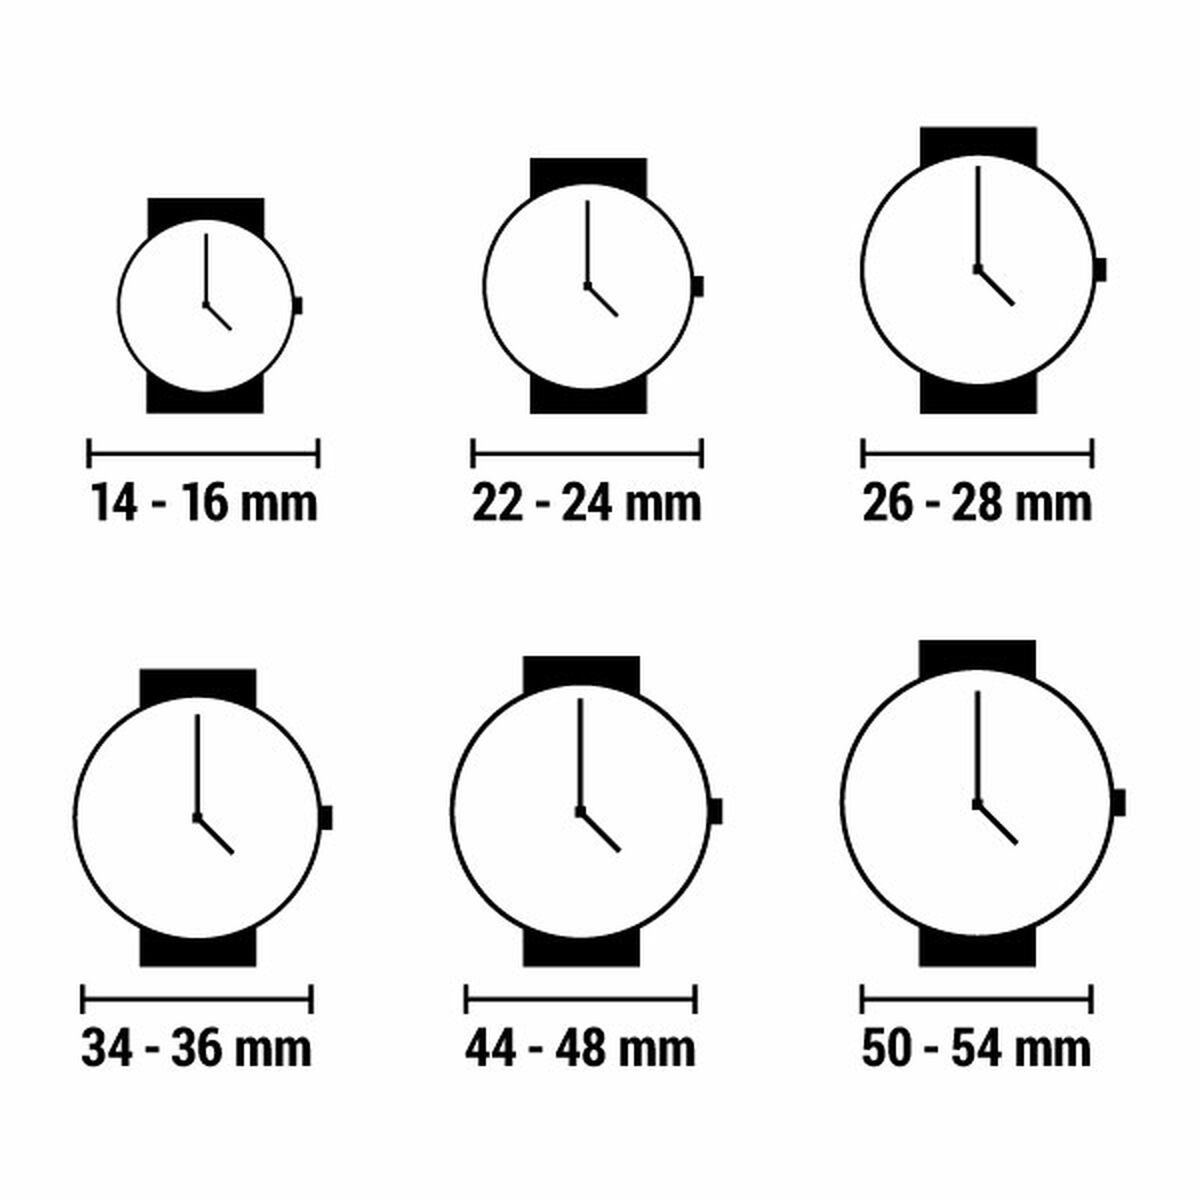 Horloge Dames Olivia Burton OB16SP16 (Ø 34 mm)